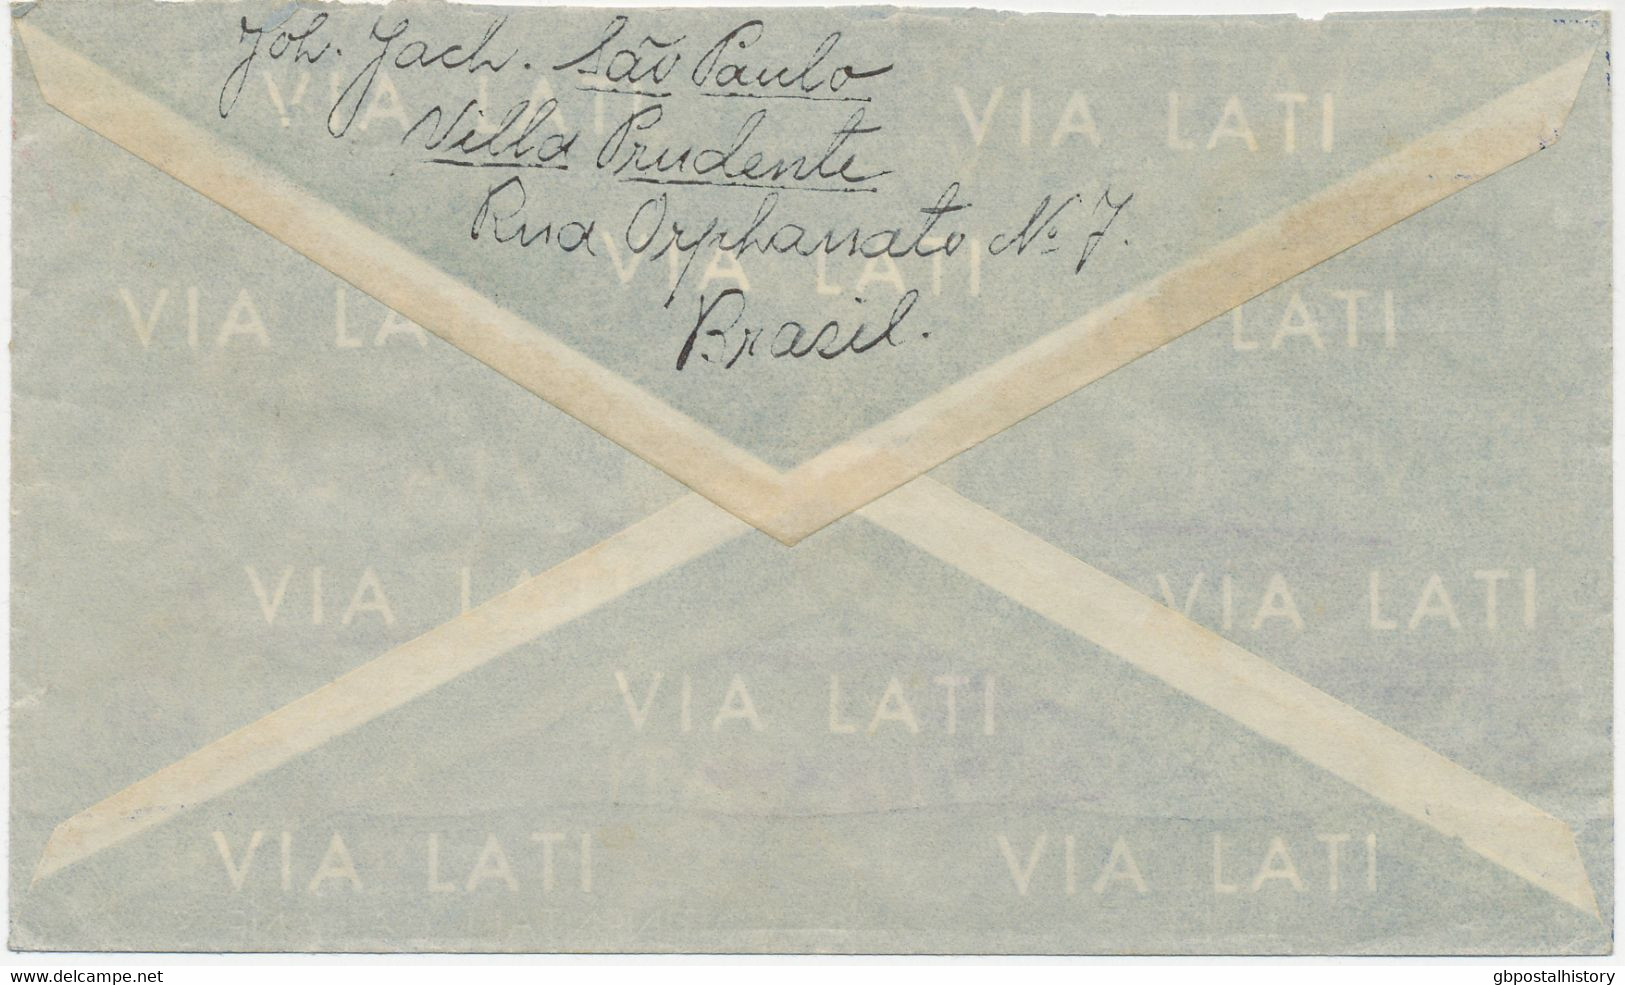 BRASILIEN 1941, Extrem  Selt. Flugpost Via L.A.T.I. (Linee Aeree Transcontinental Italiane - Nur 211 Postflüge) LETZTTAG - Airmail